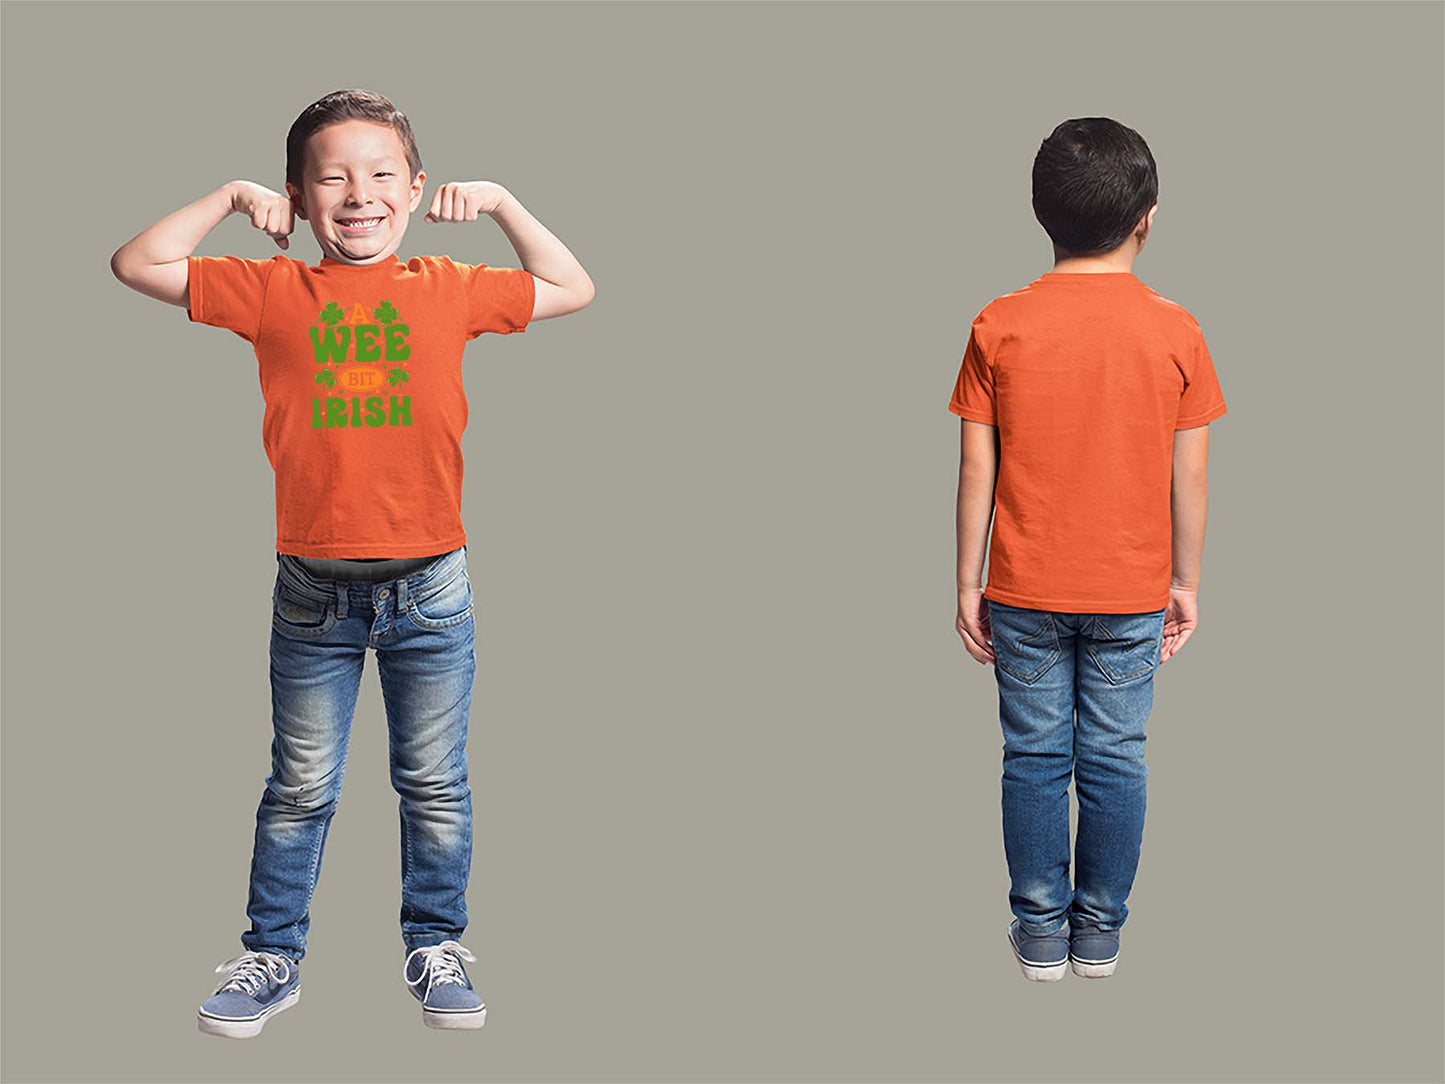 A Wee Bit Irish Youth T-Shirt Youth Small Orange